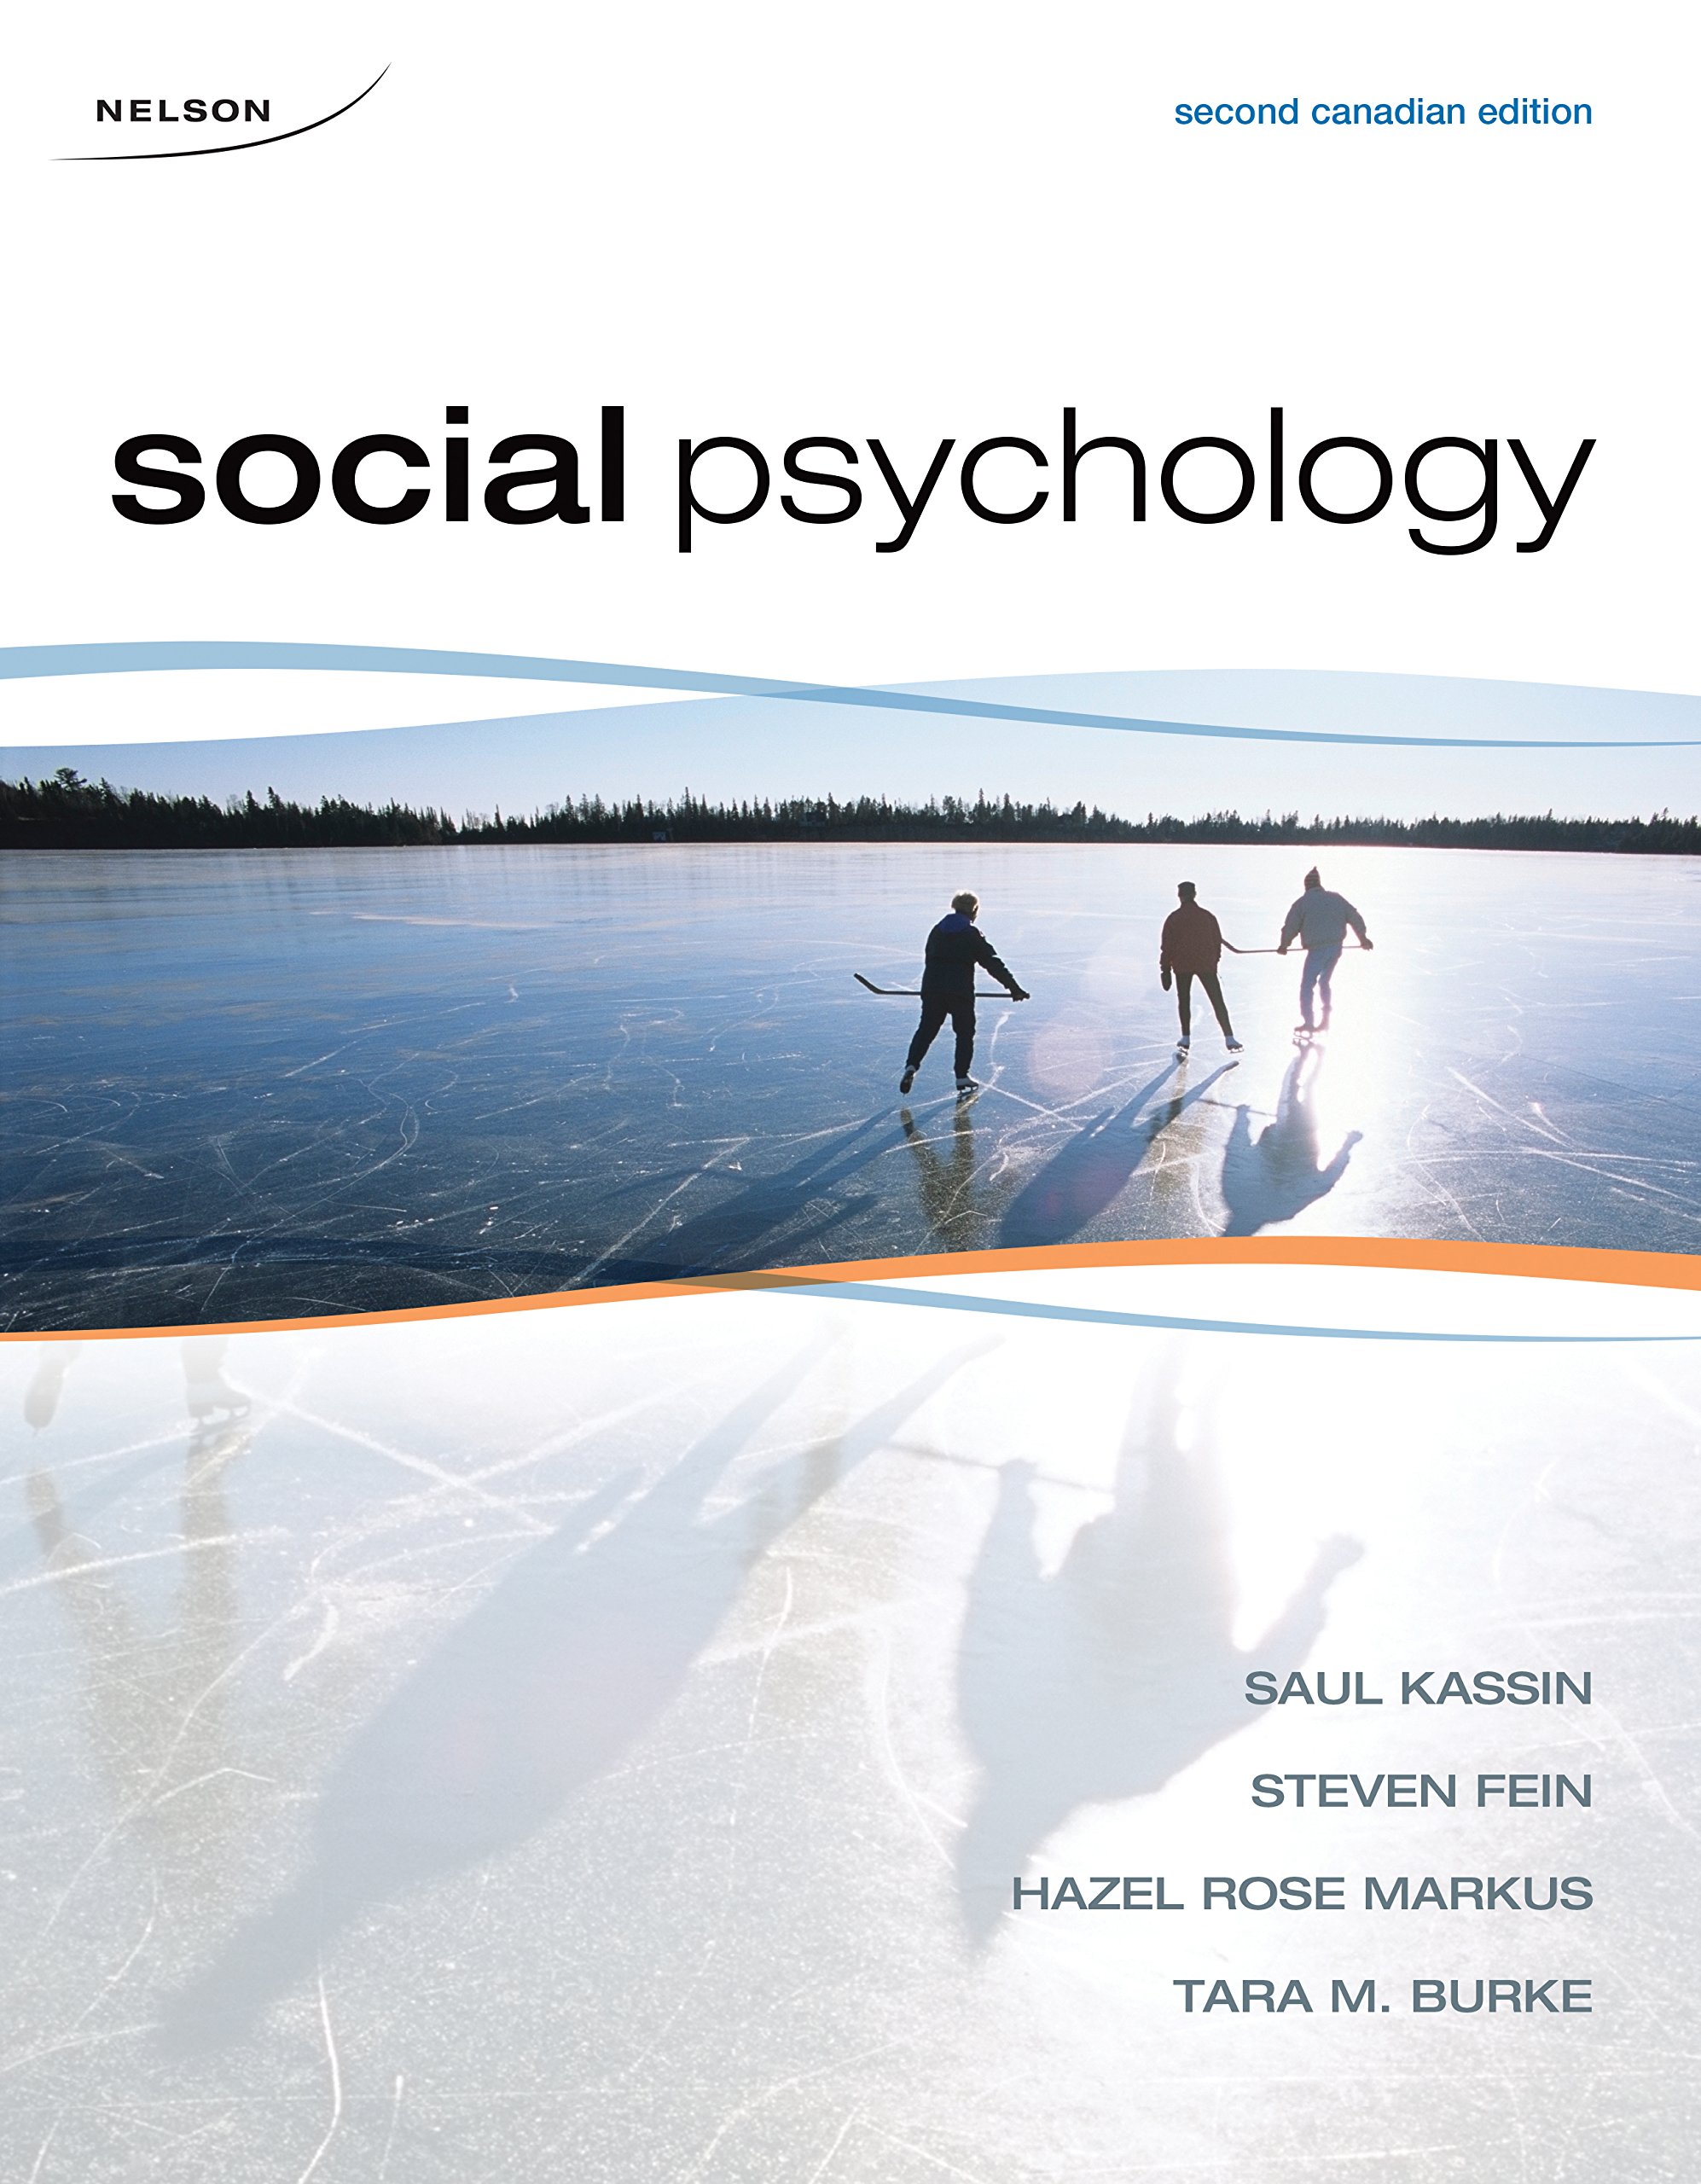 Social psychology 2nd canadian edition kassin pdf download